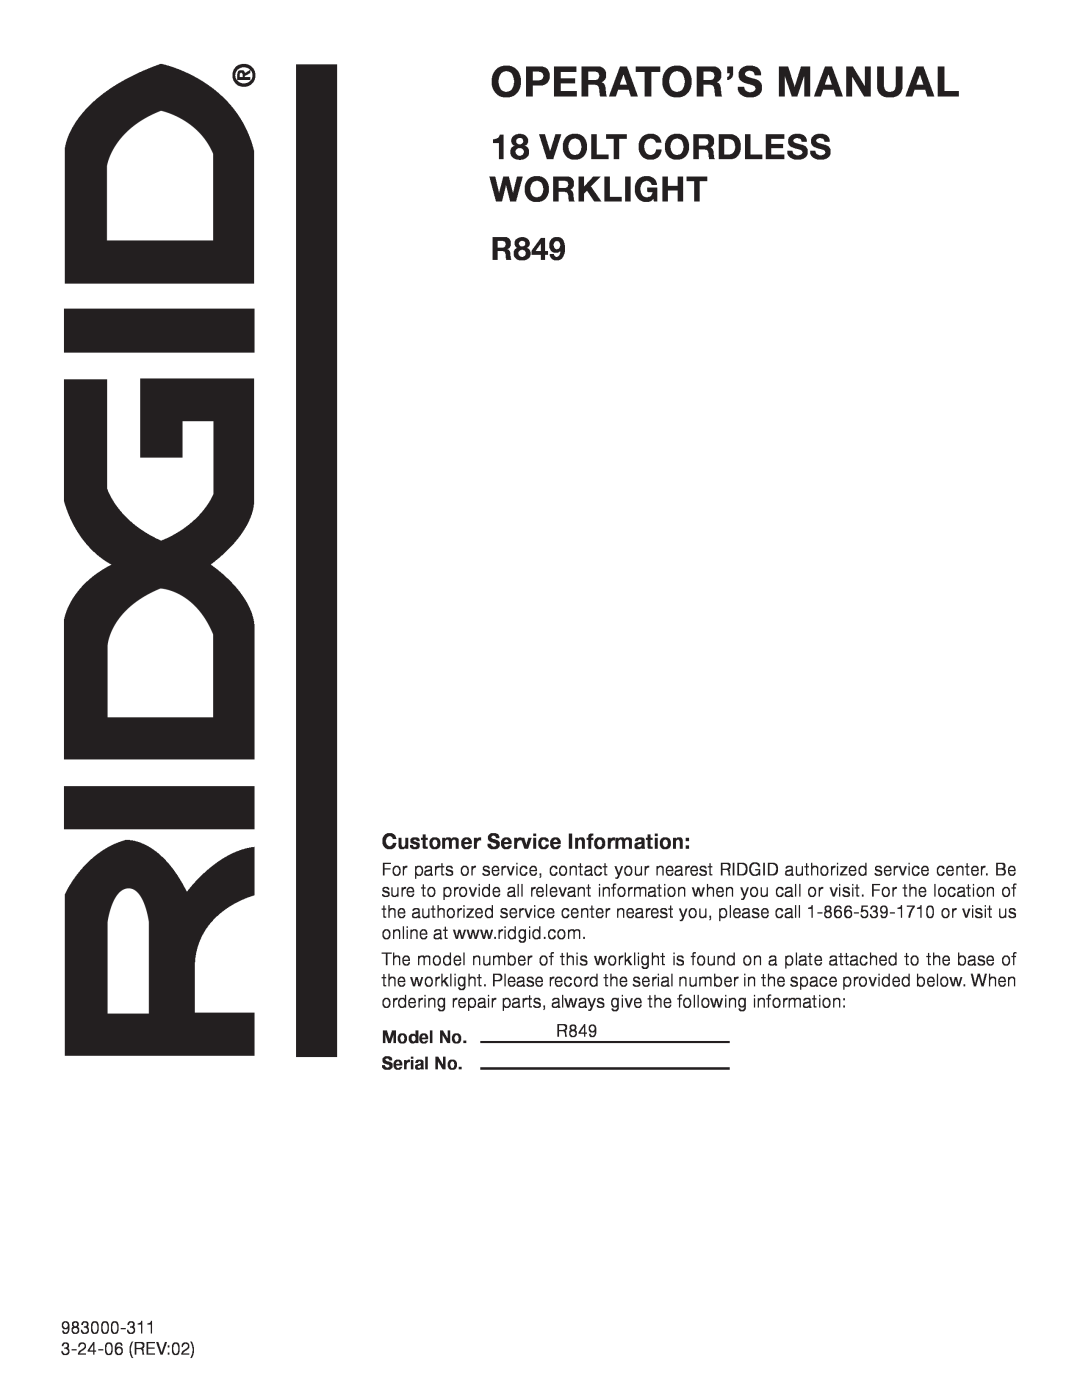 RIDGID R849 manual Customer Service Information, Operator’S Manual, Volt Cordless Worklight, Model No, Serial No 